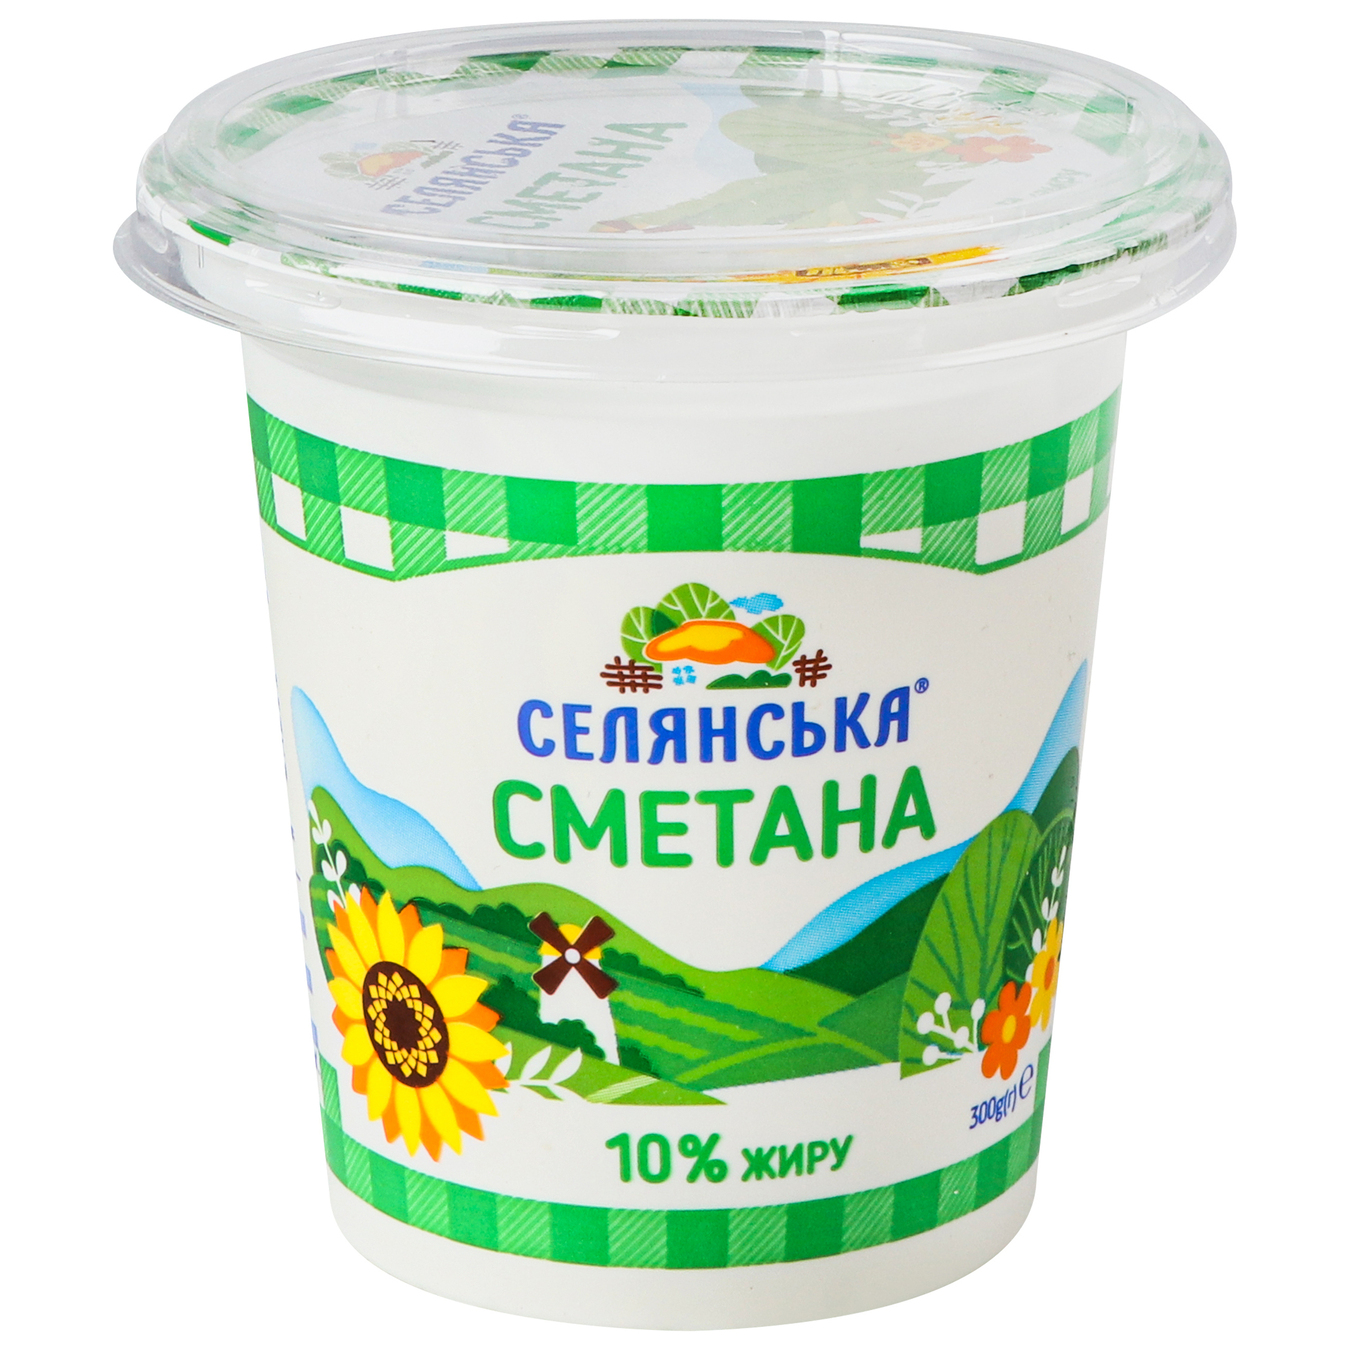 Krestyanskaya sour cream 10% 300g 2